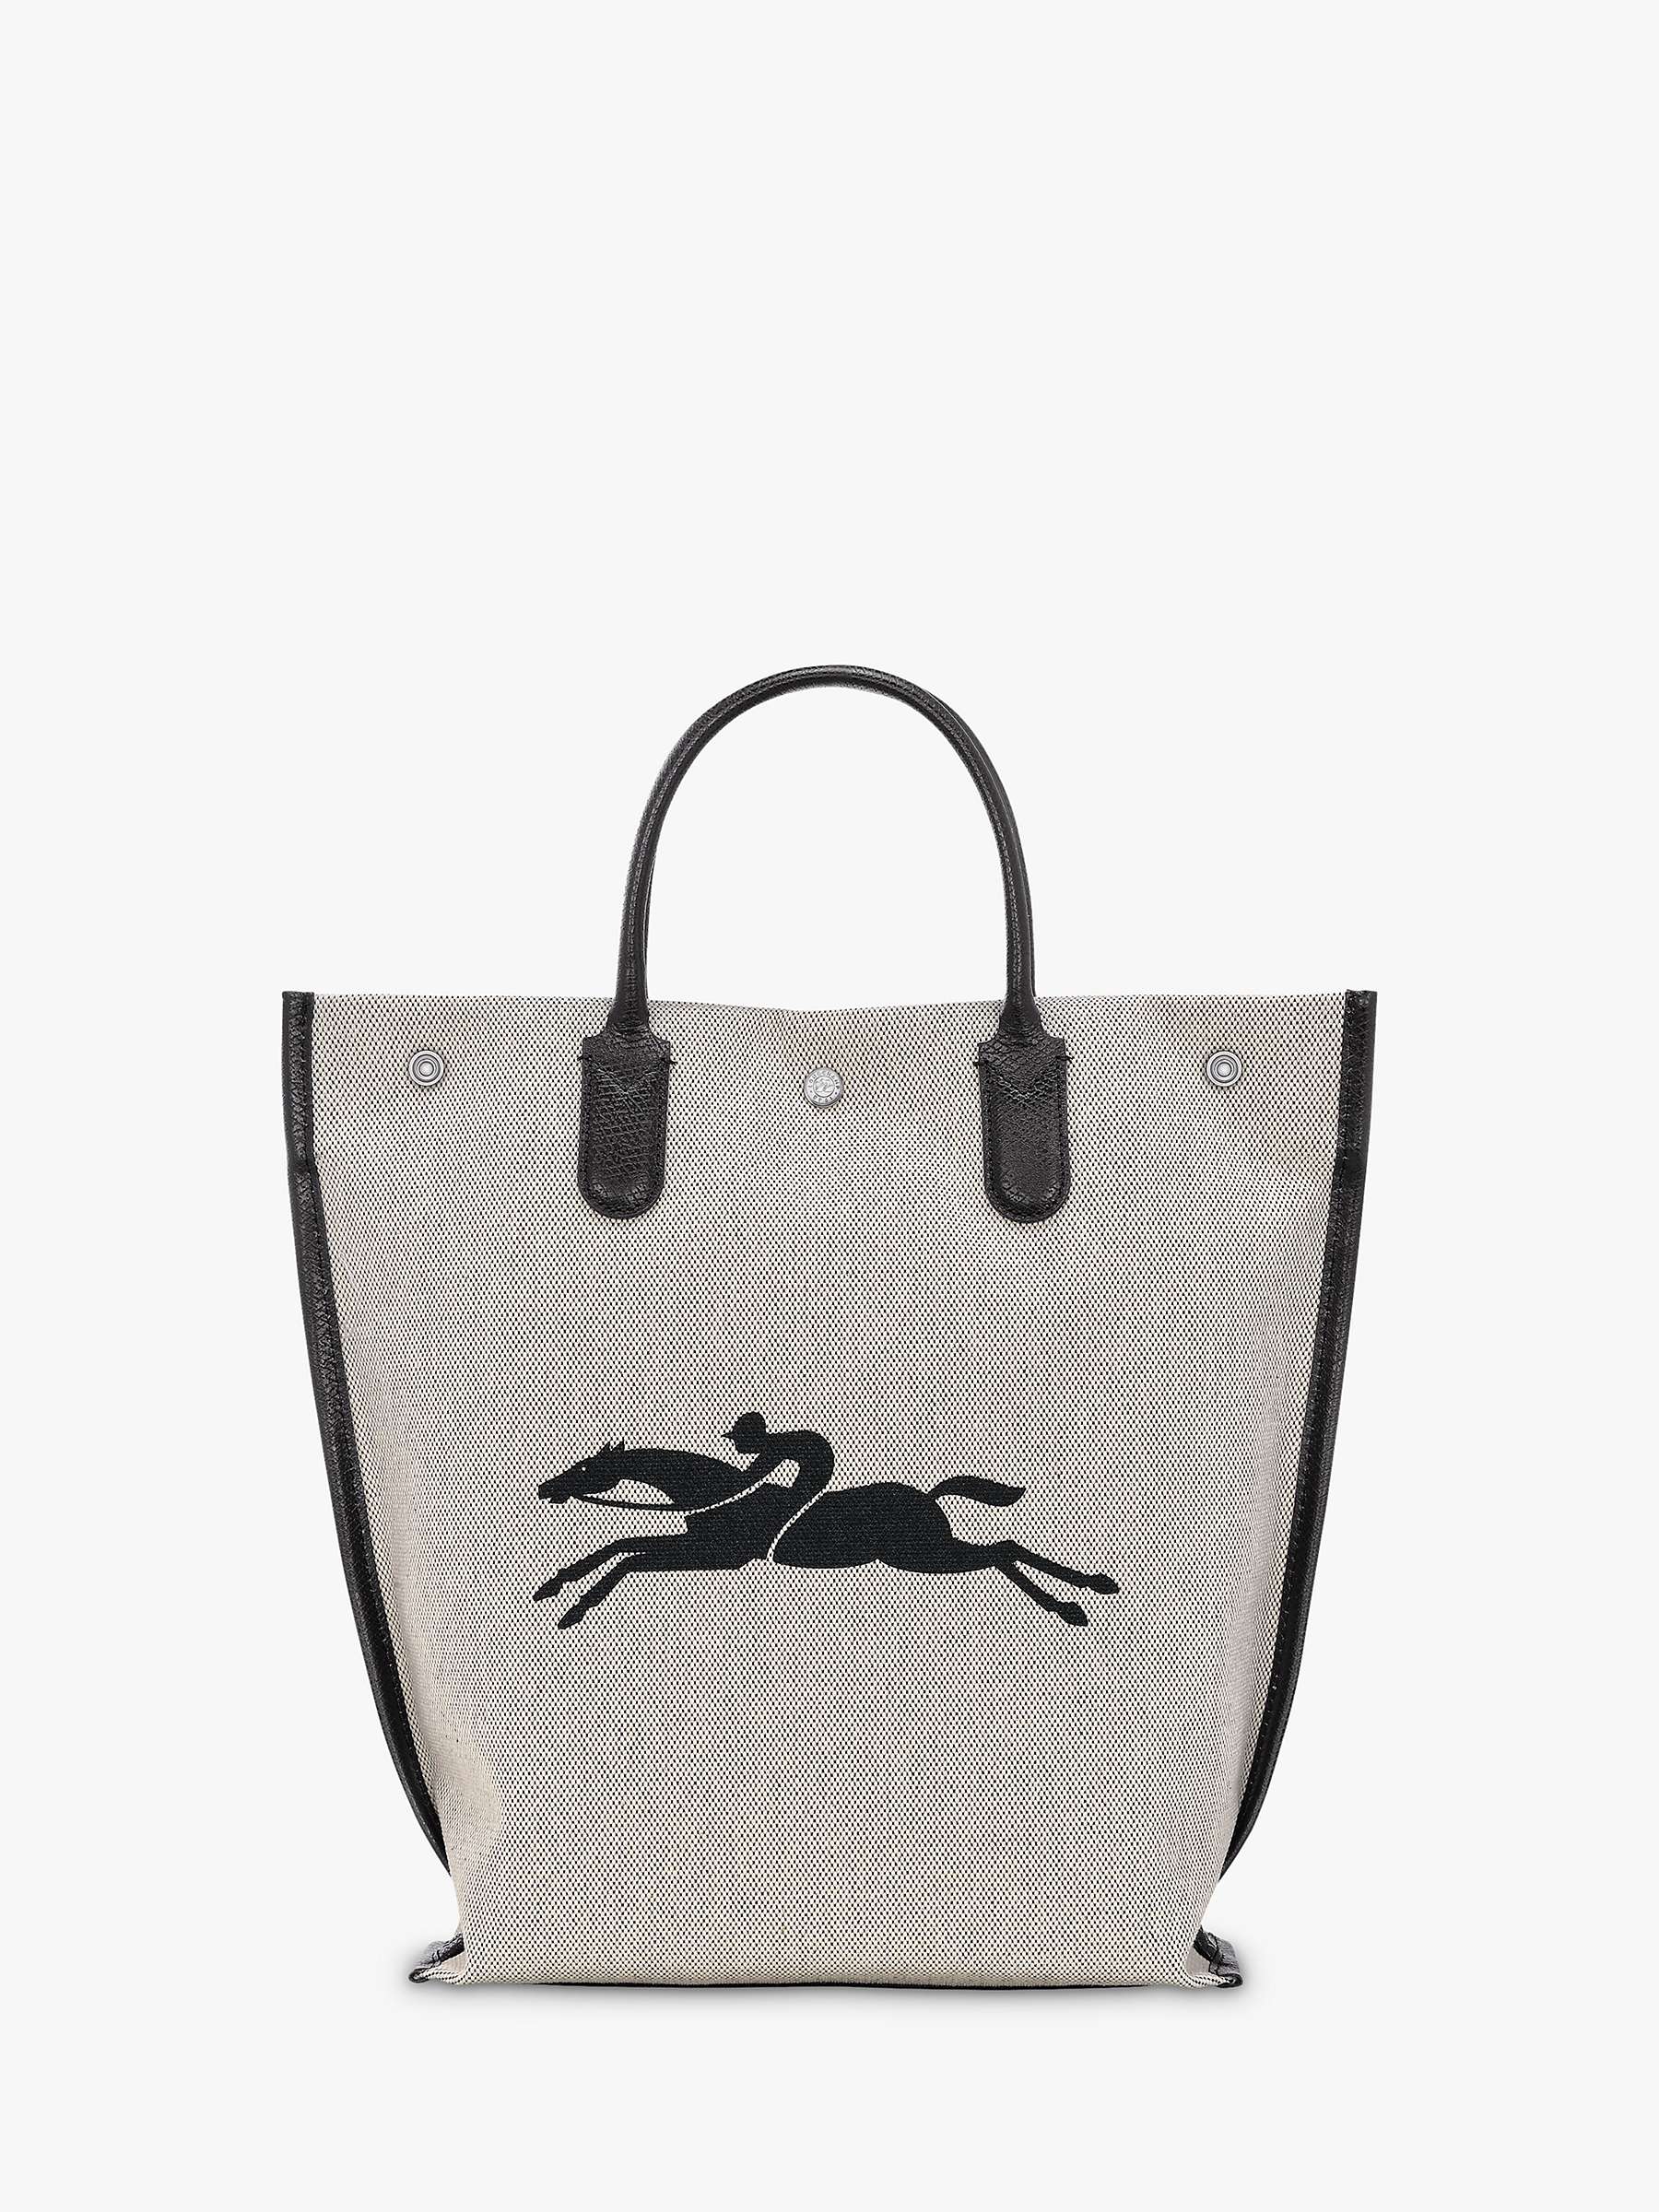 Buy Longchamp Essential Medium Canvas Tote Bag, Ecru Online at johnlewis.com